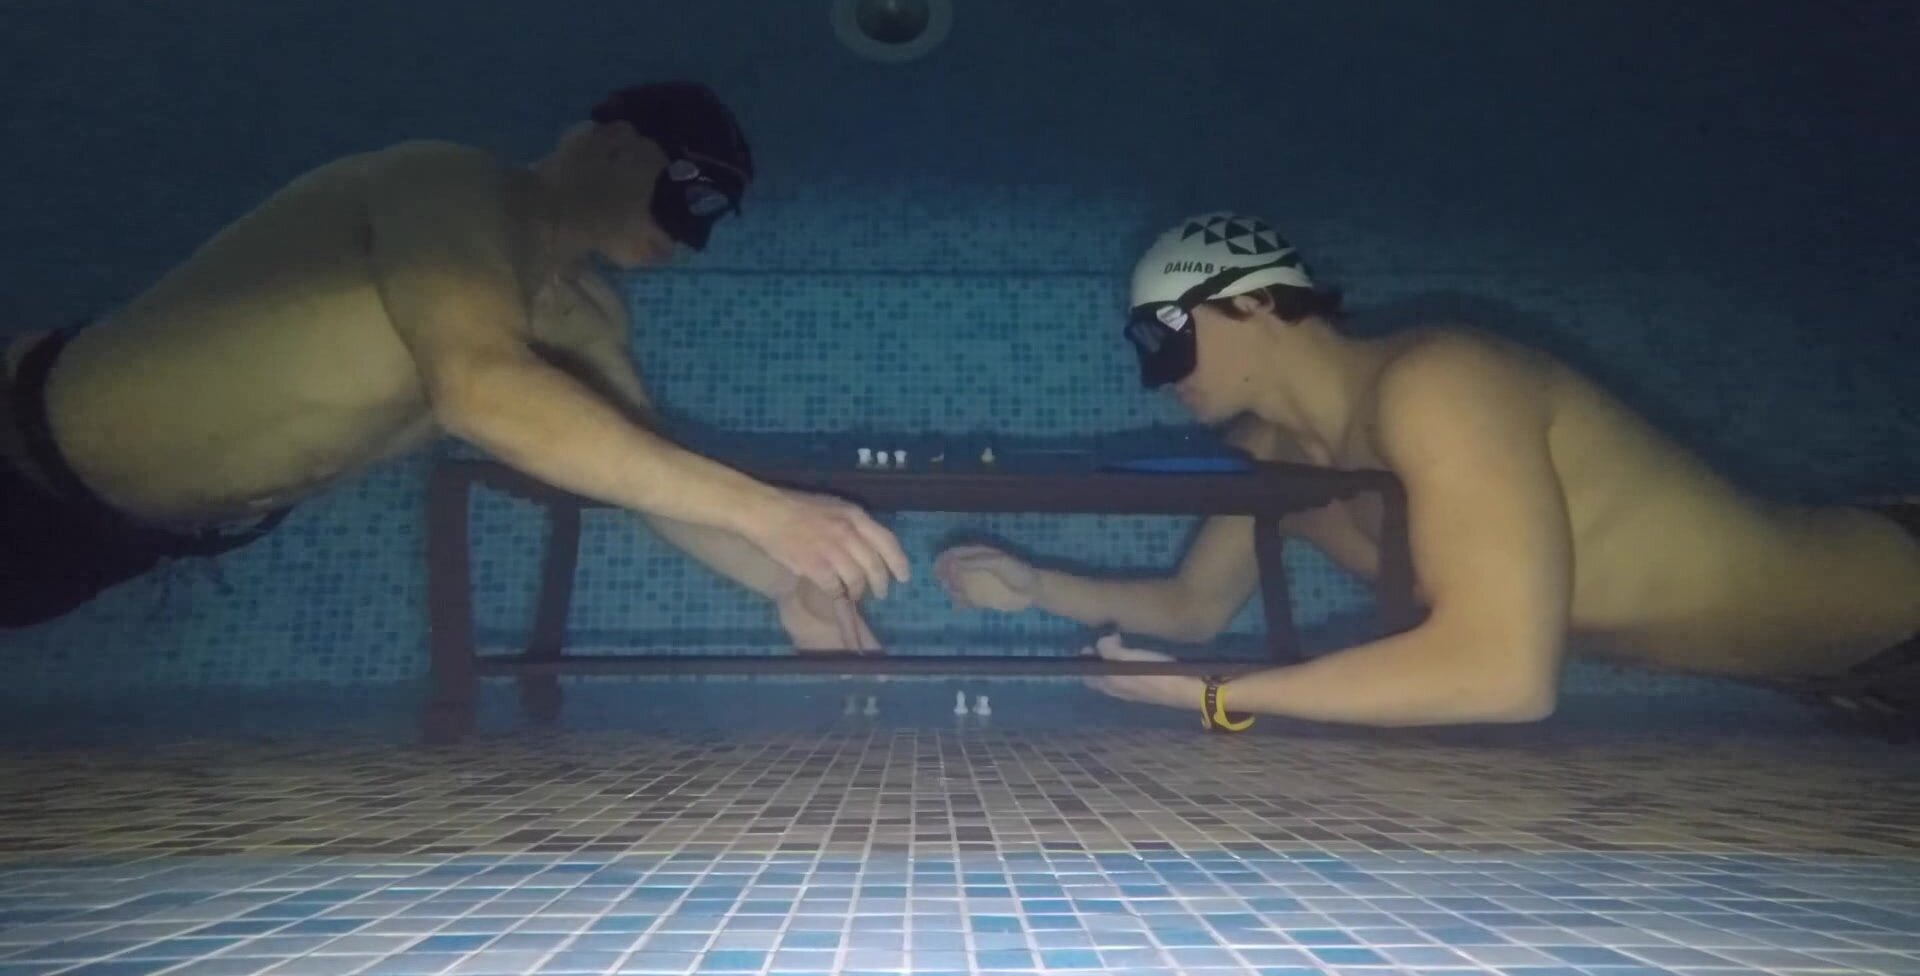 Underwater russian breathold contest